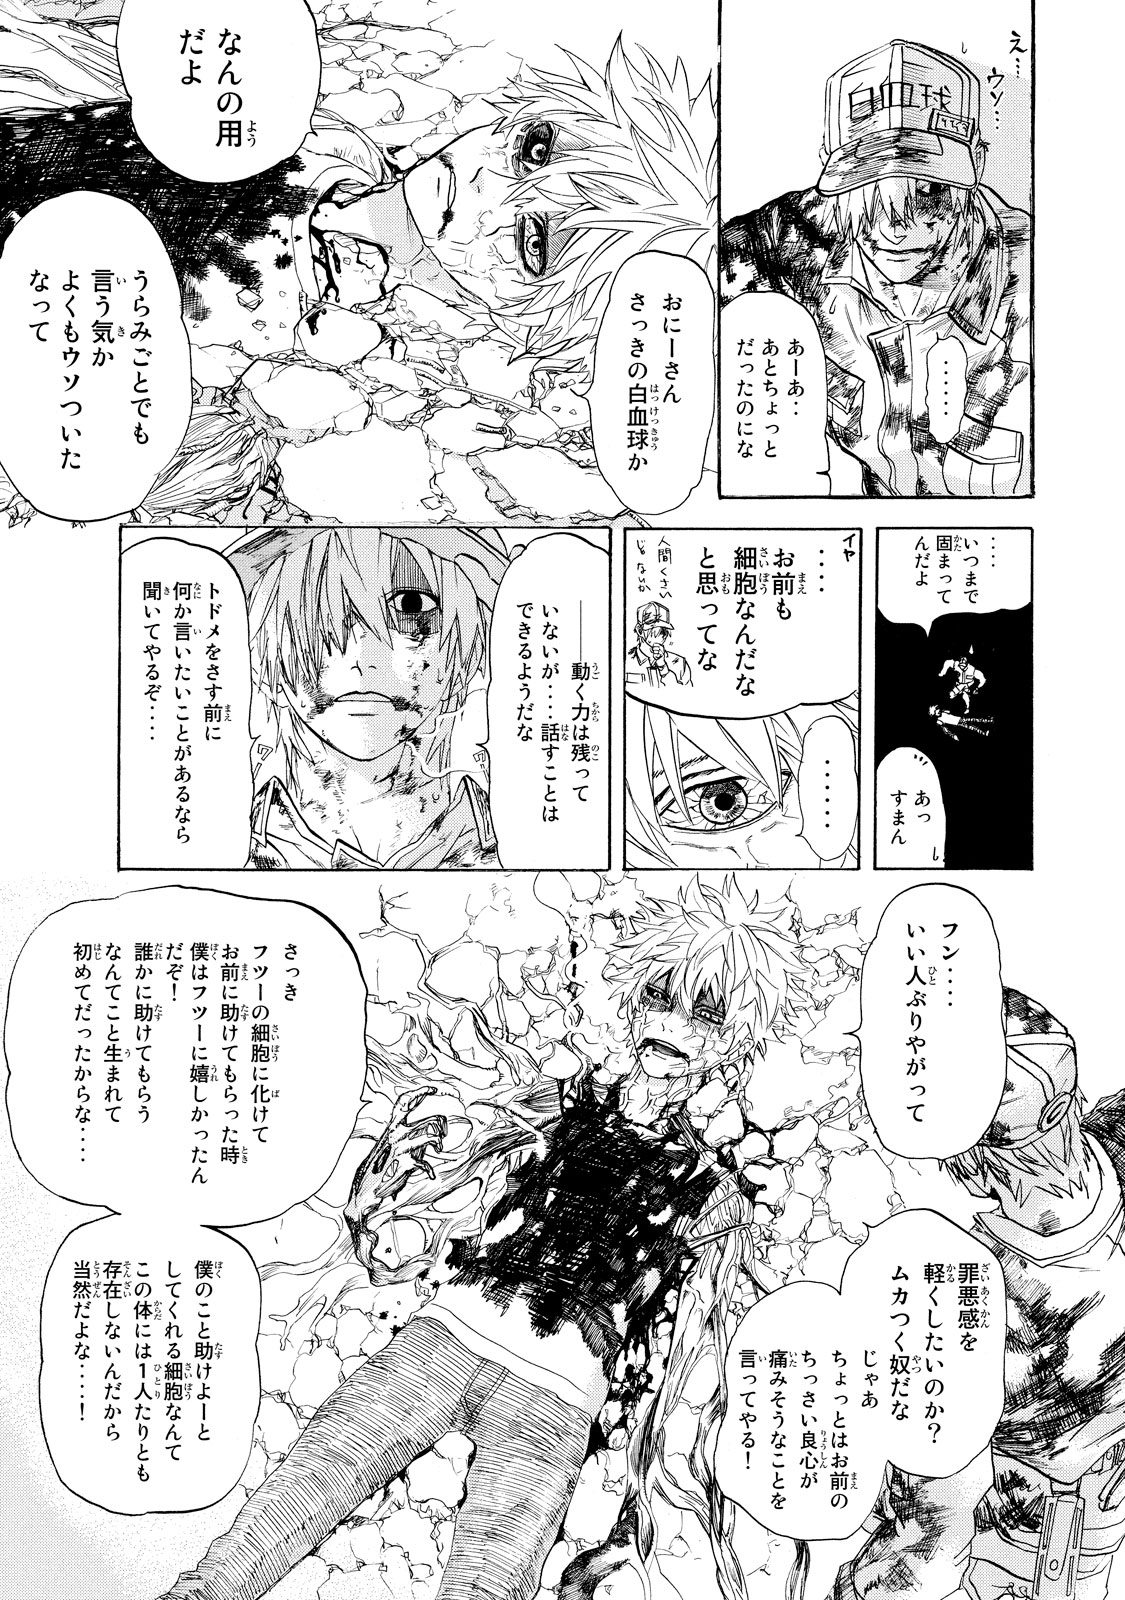 Hataraku Saibou - Chapter 9 - Page 40